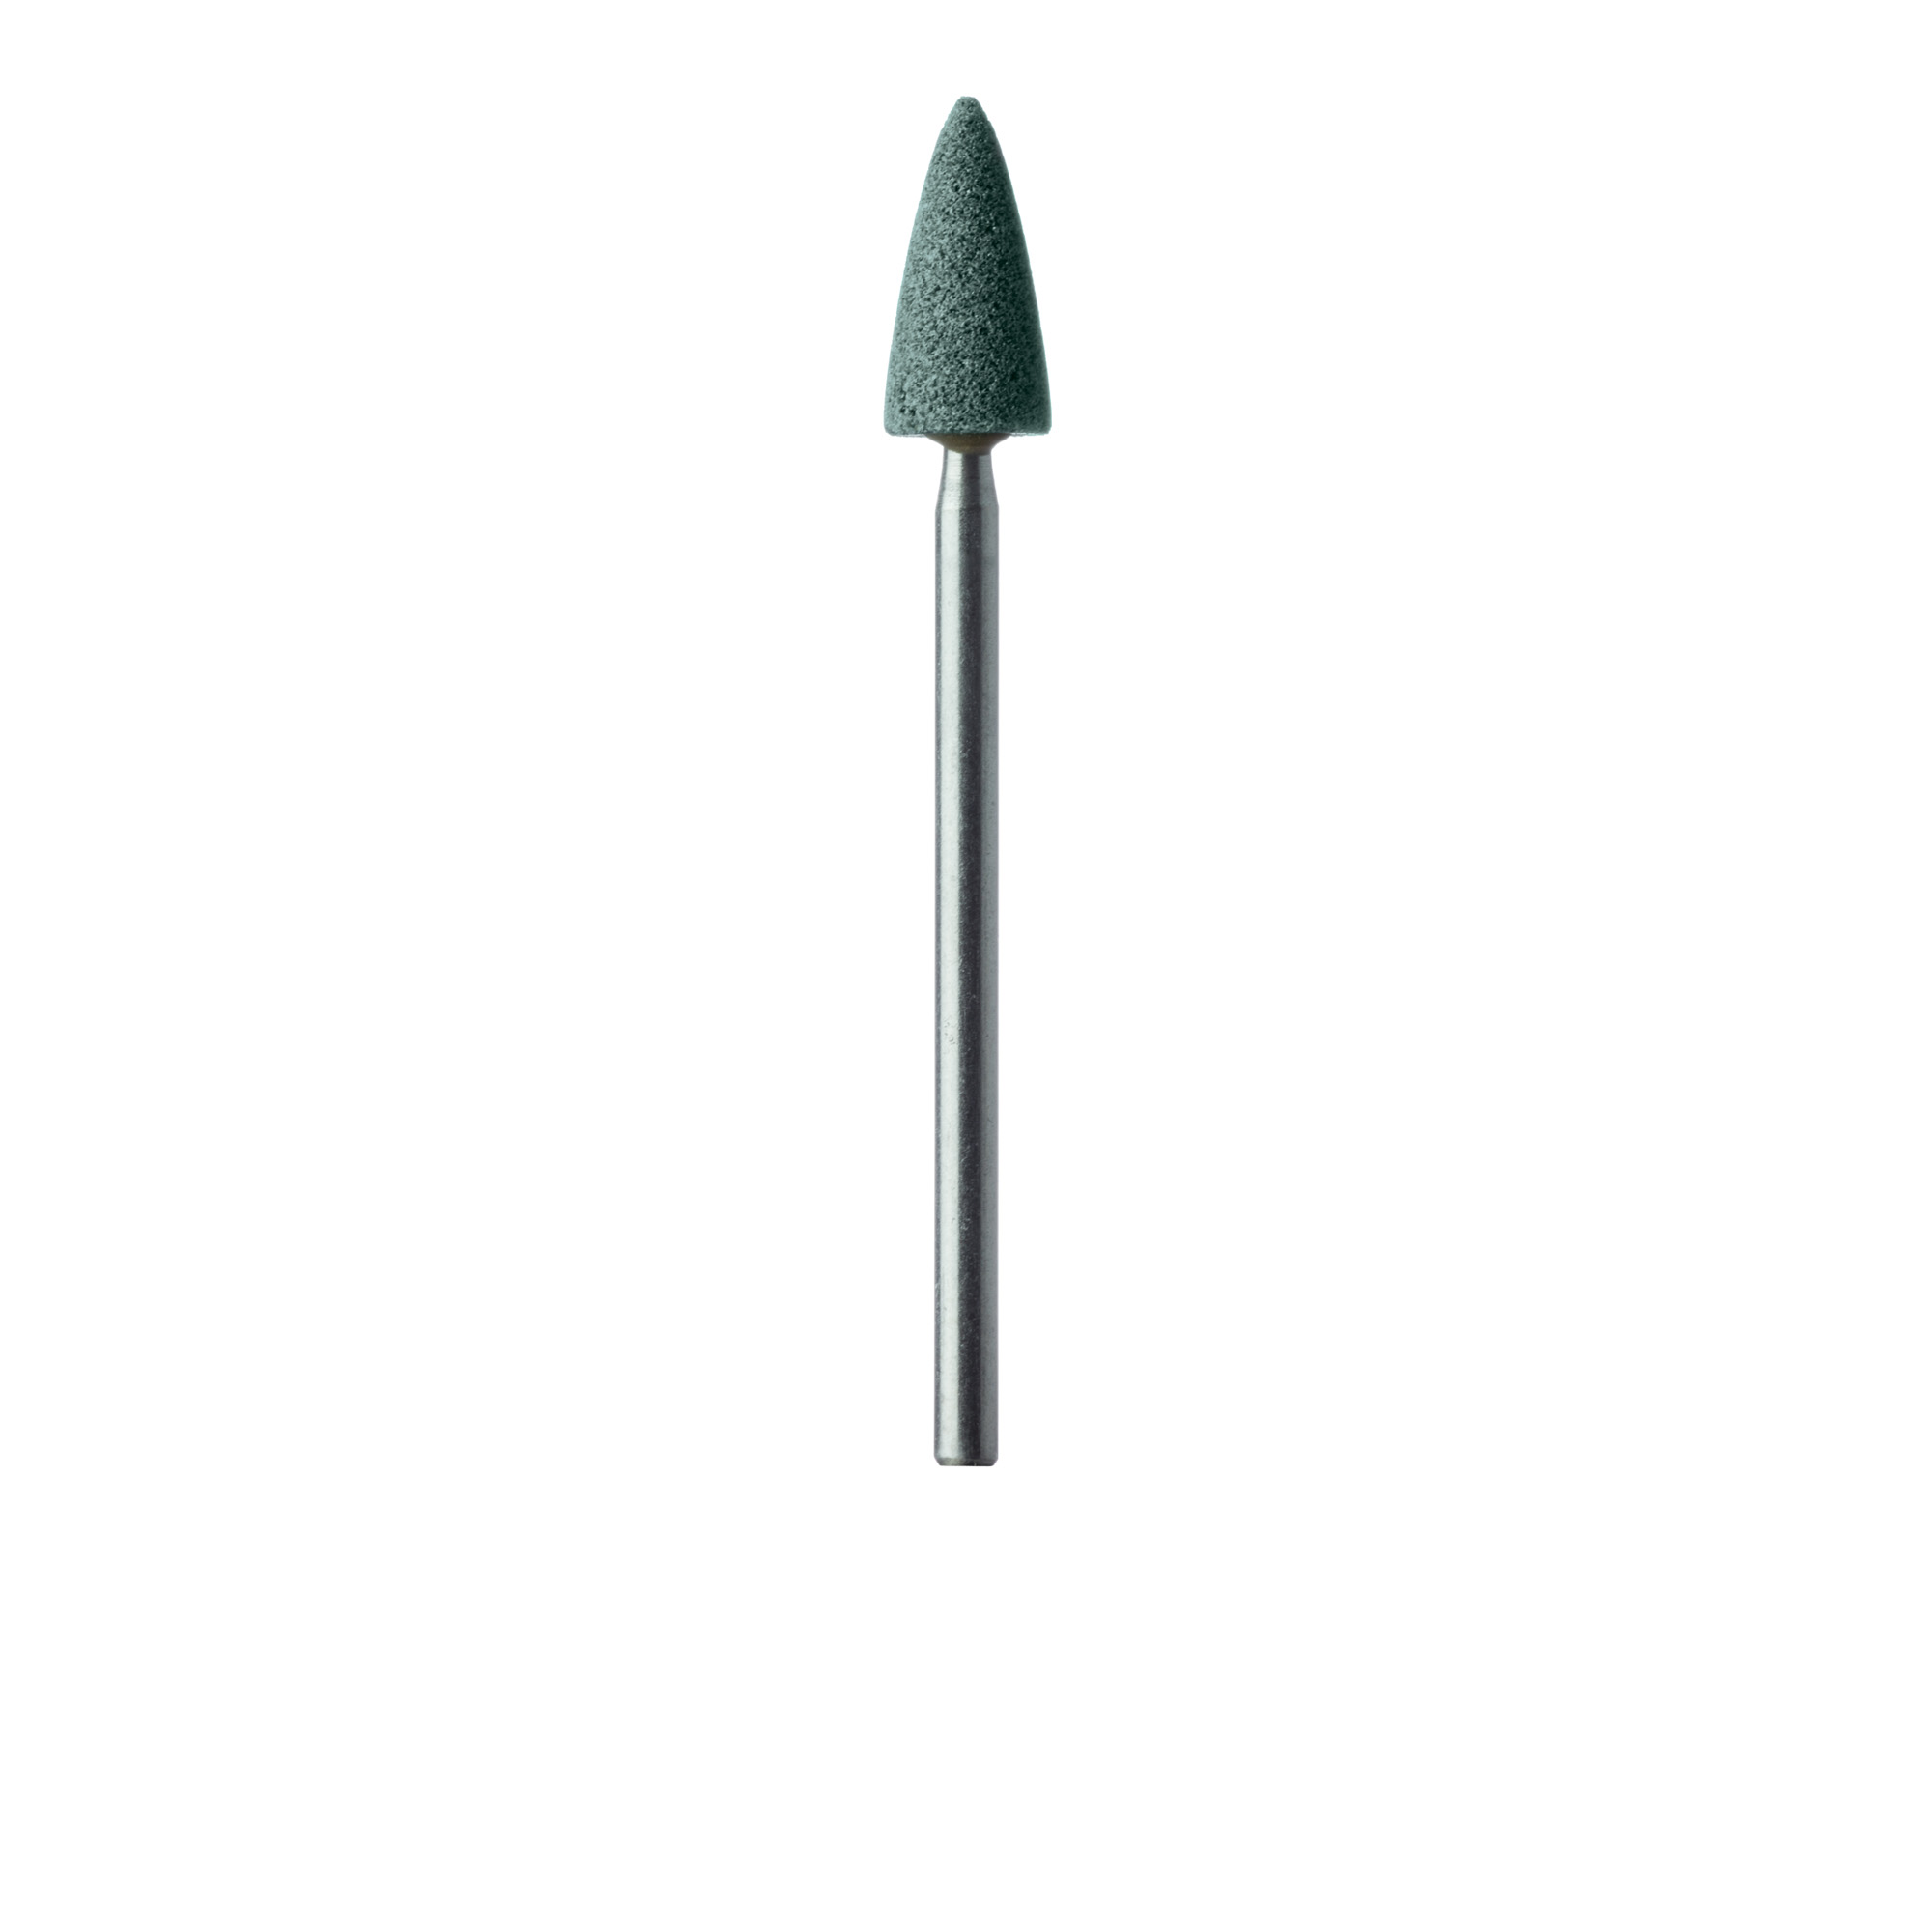 665-060-HP-GRN Abrasive, Green, Long Flame, 6mm Ø, Medium, HP